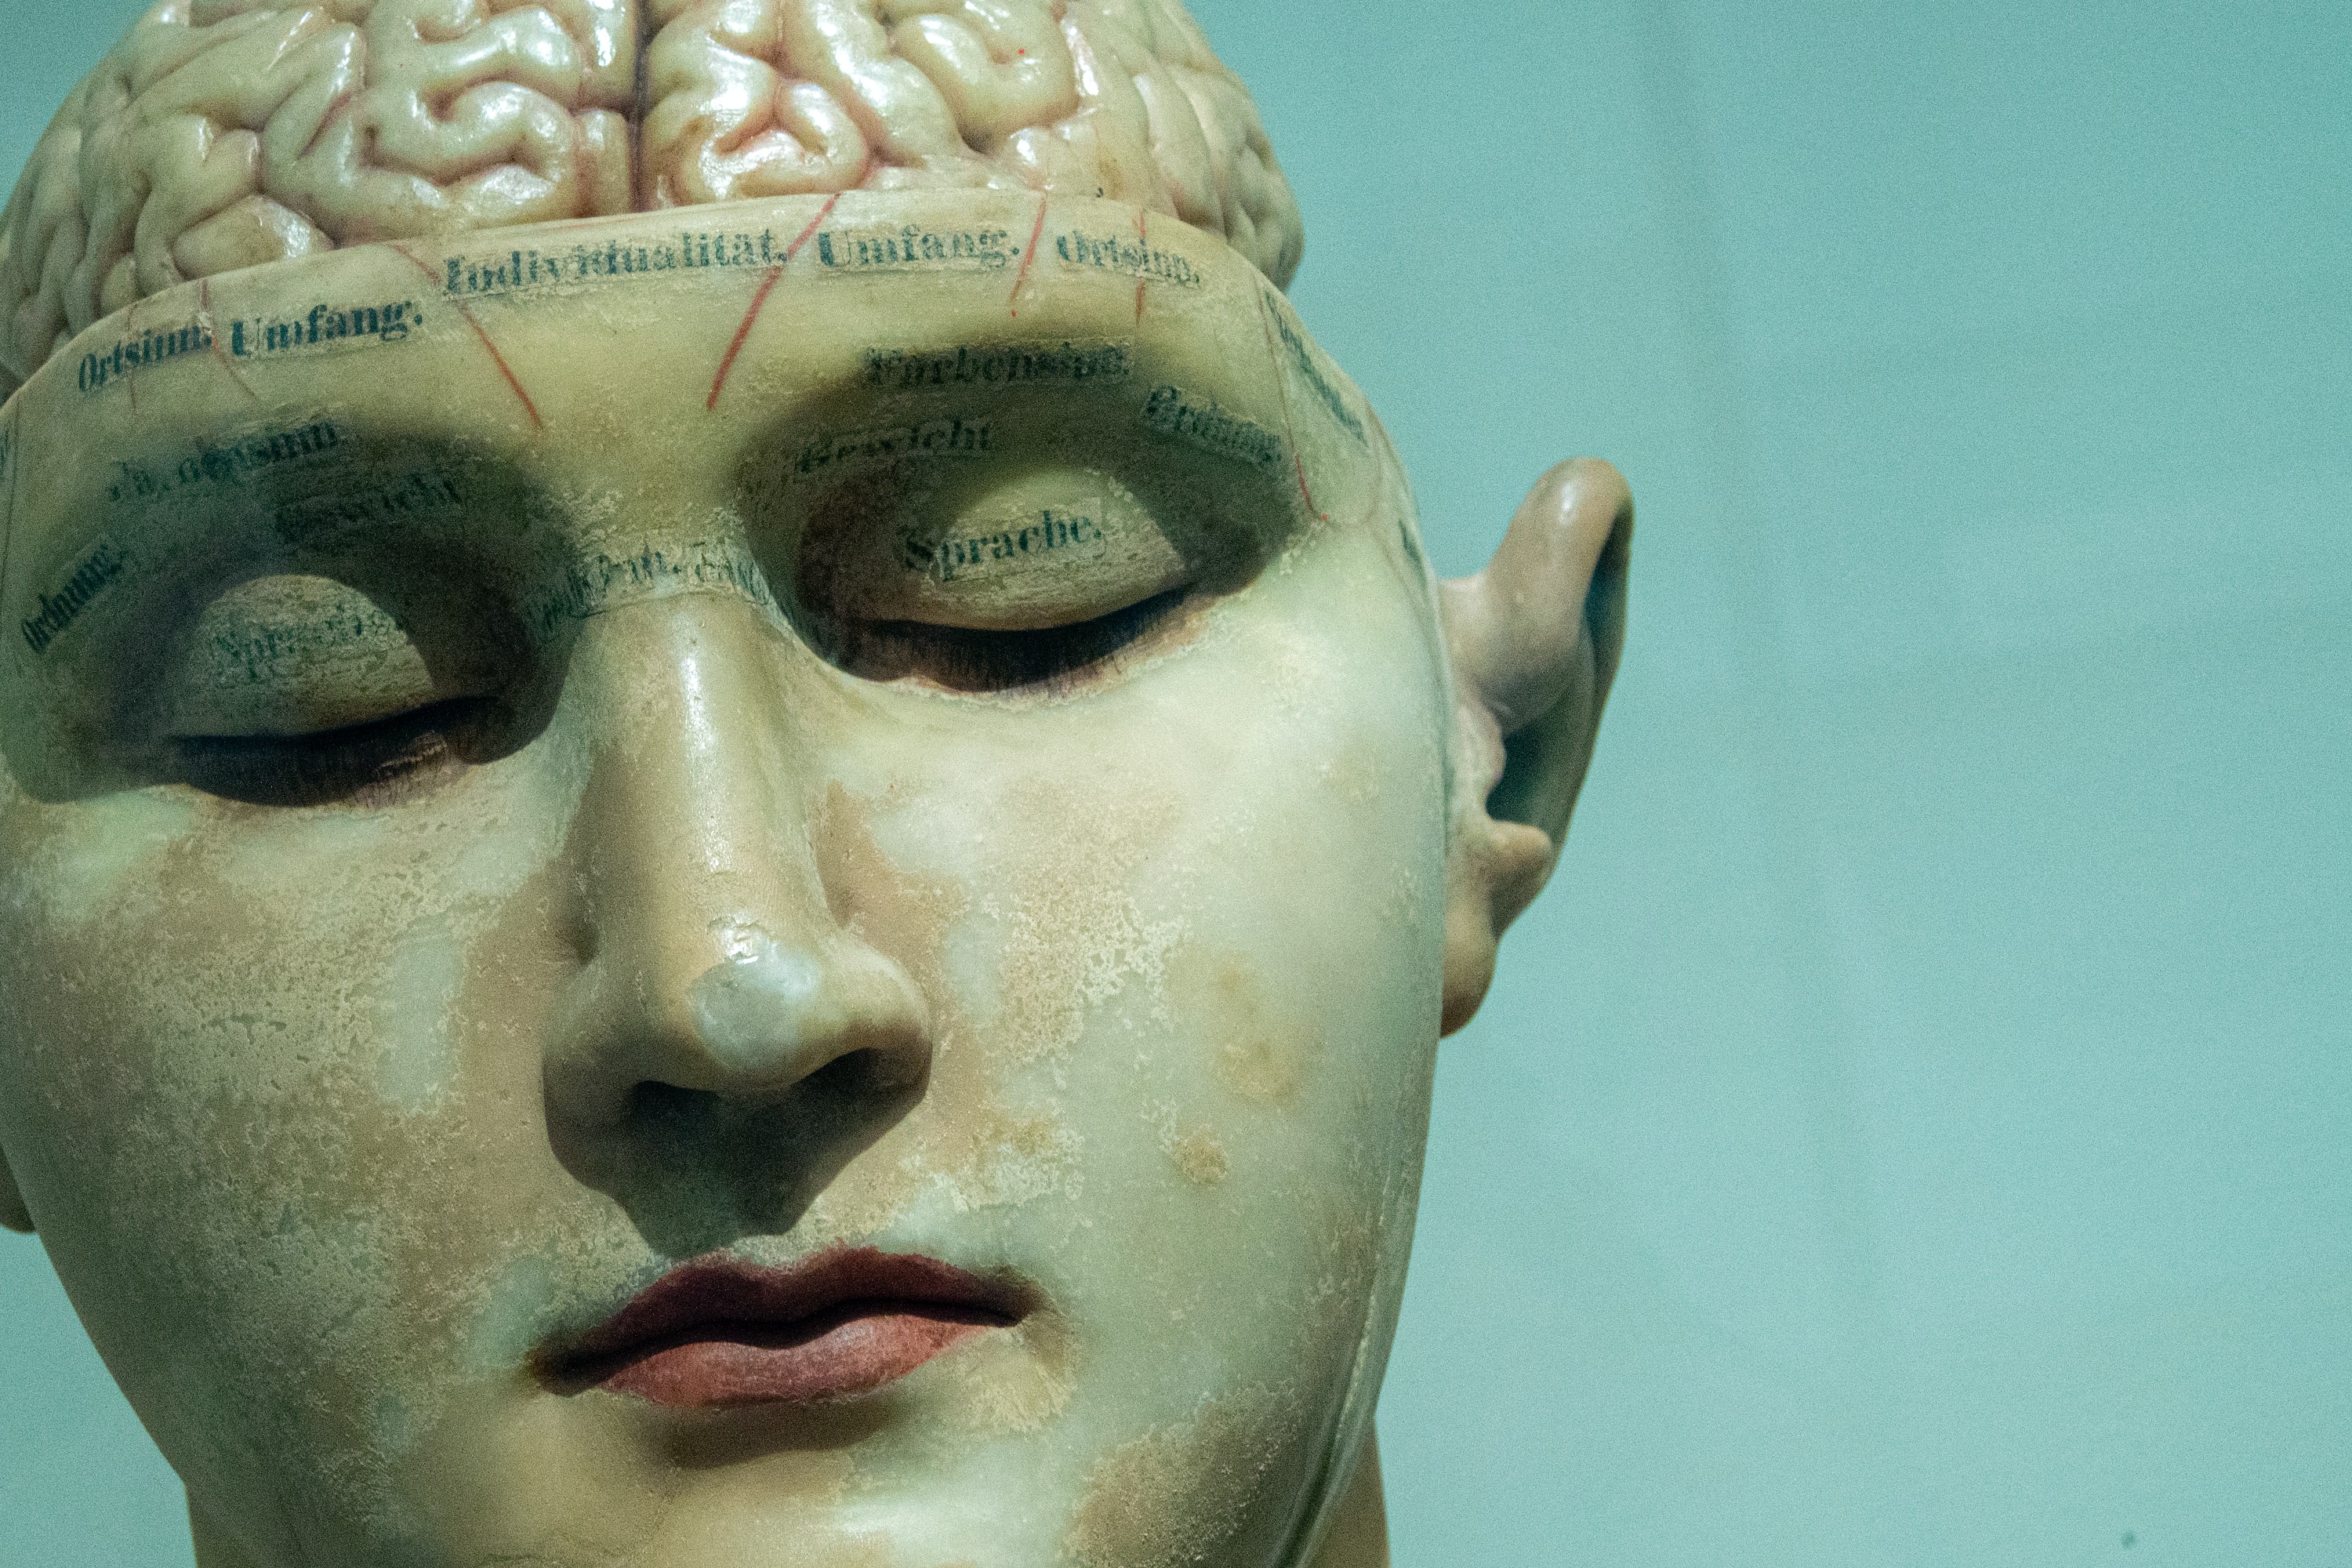 20th century brain anatomy model; image by David Matos, via Unsplash.com.